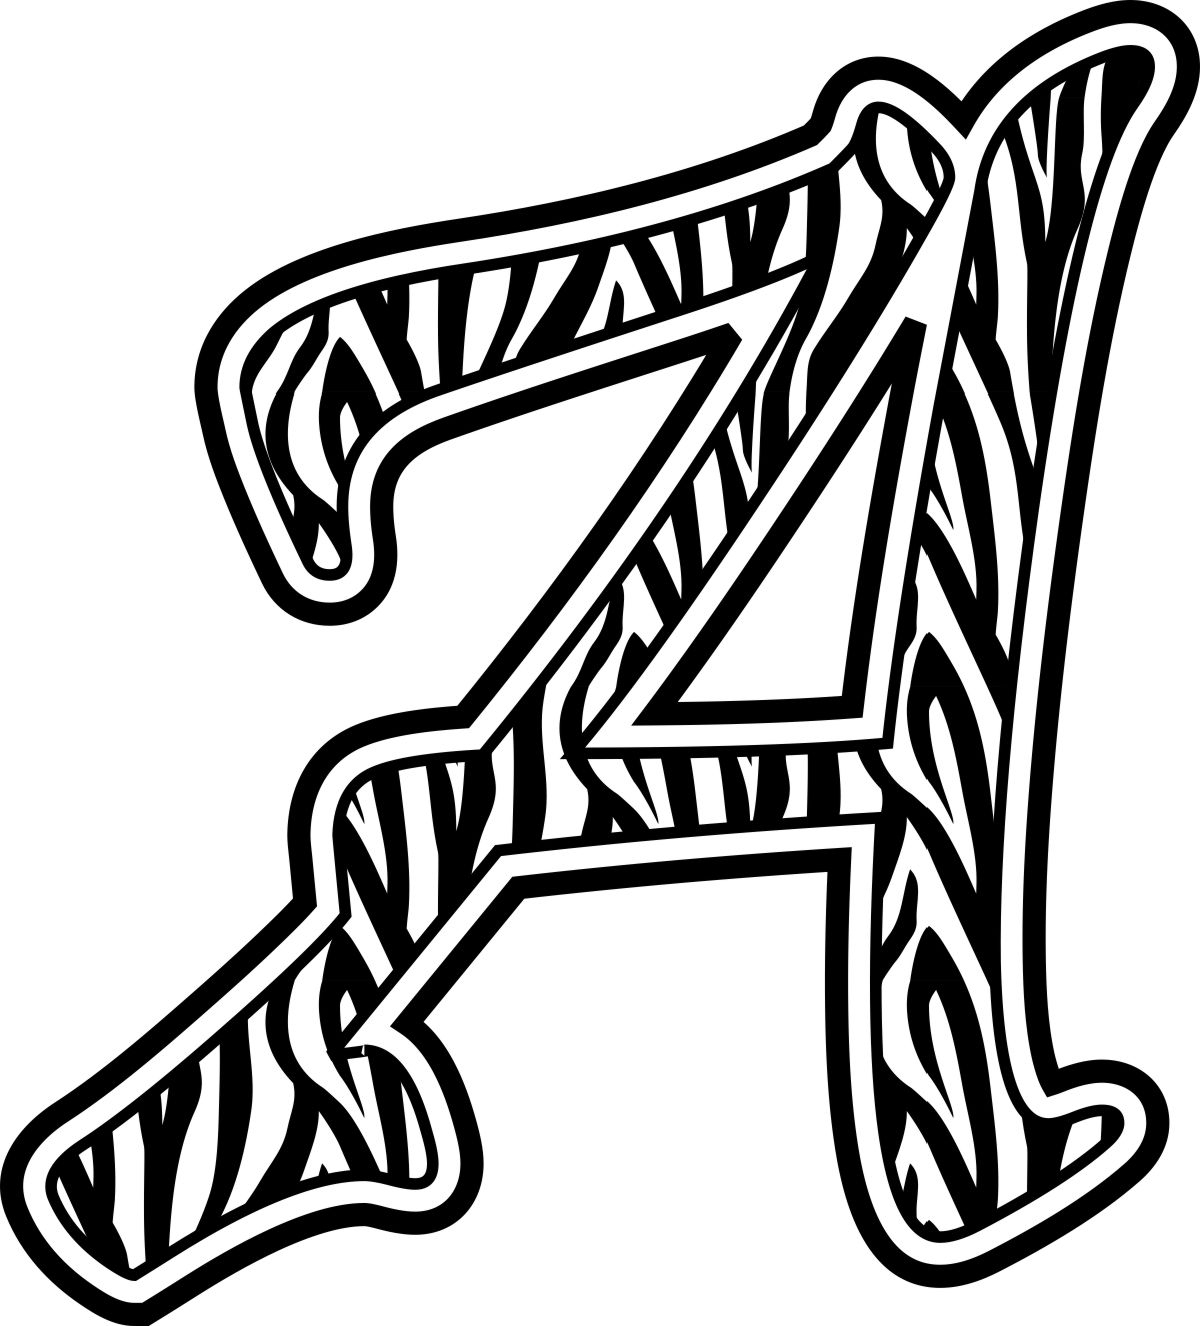 Free Printable Pencil Drawings Of Zebras - Clipart Best - Cliparts.co - Free Printable Pencil Drawings